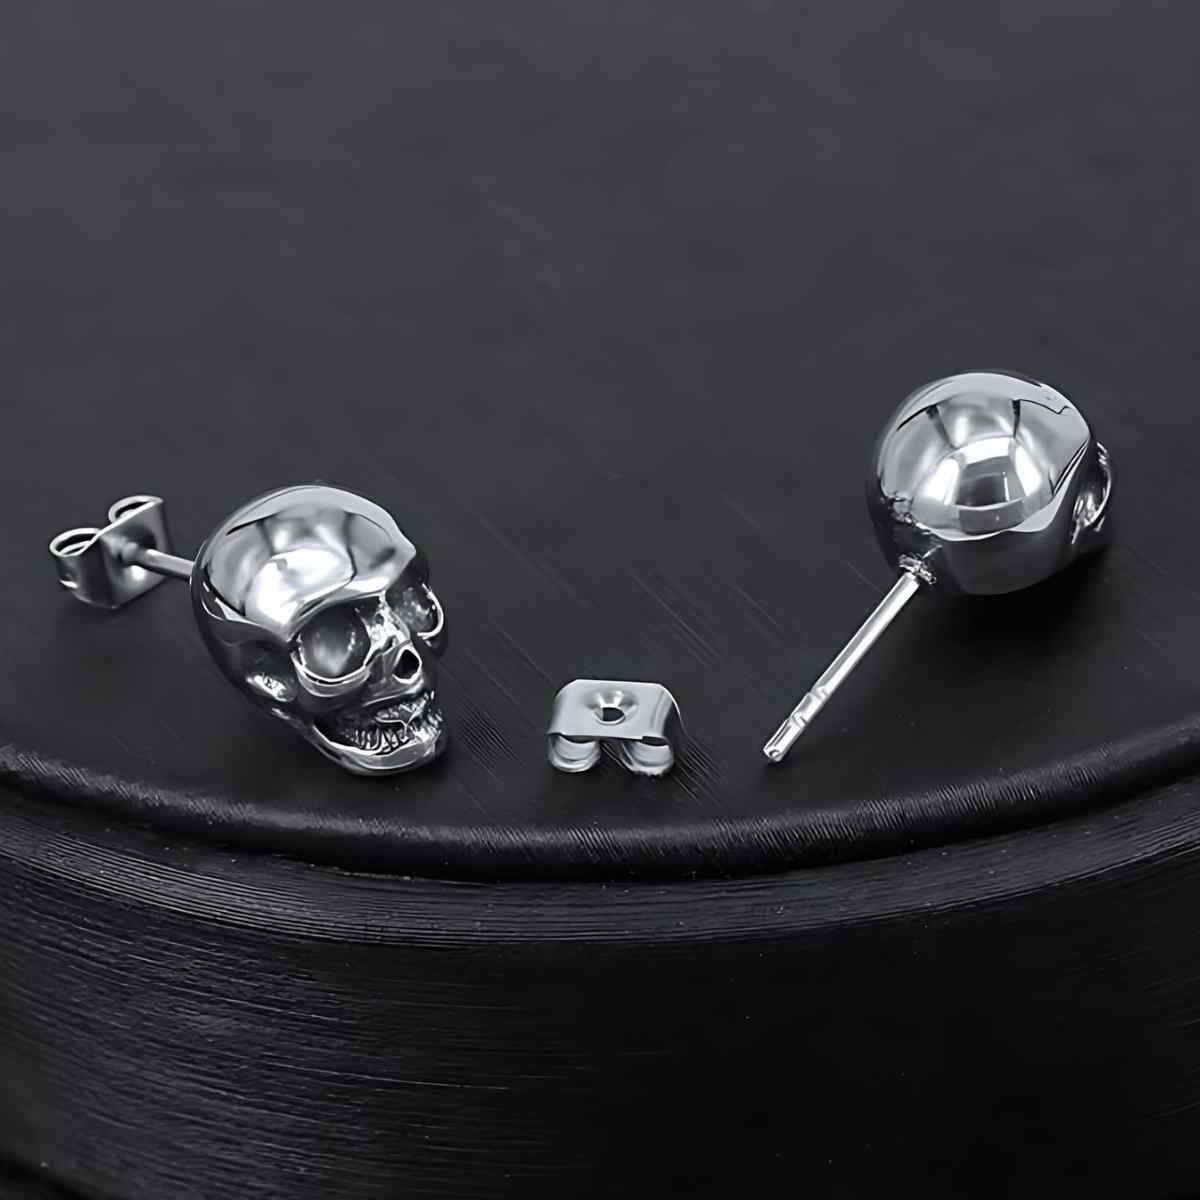 Skull Stud Earrings Stainless Steel Xenos Jewelry